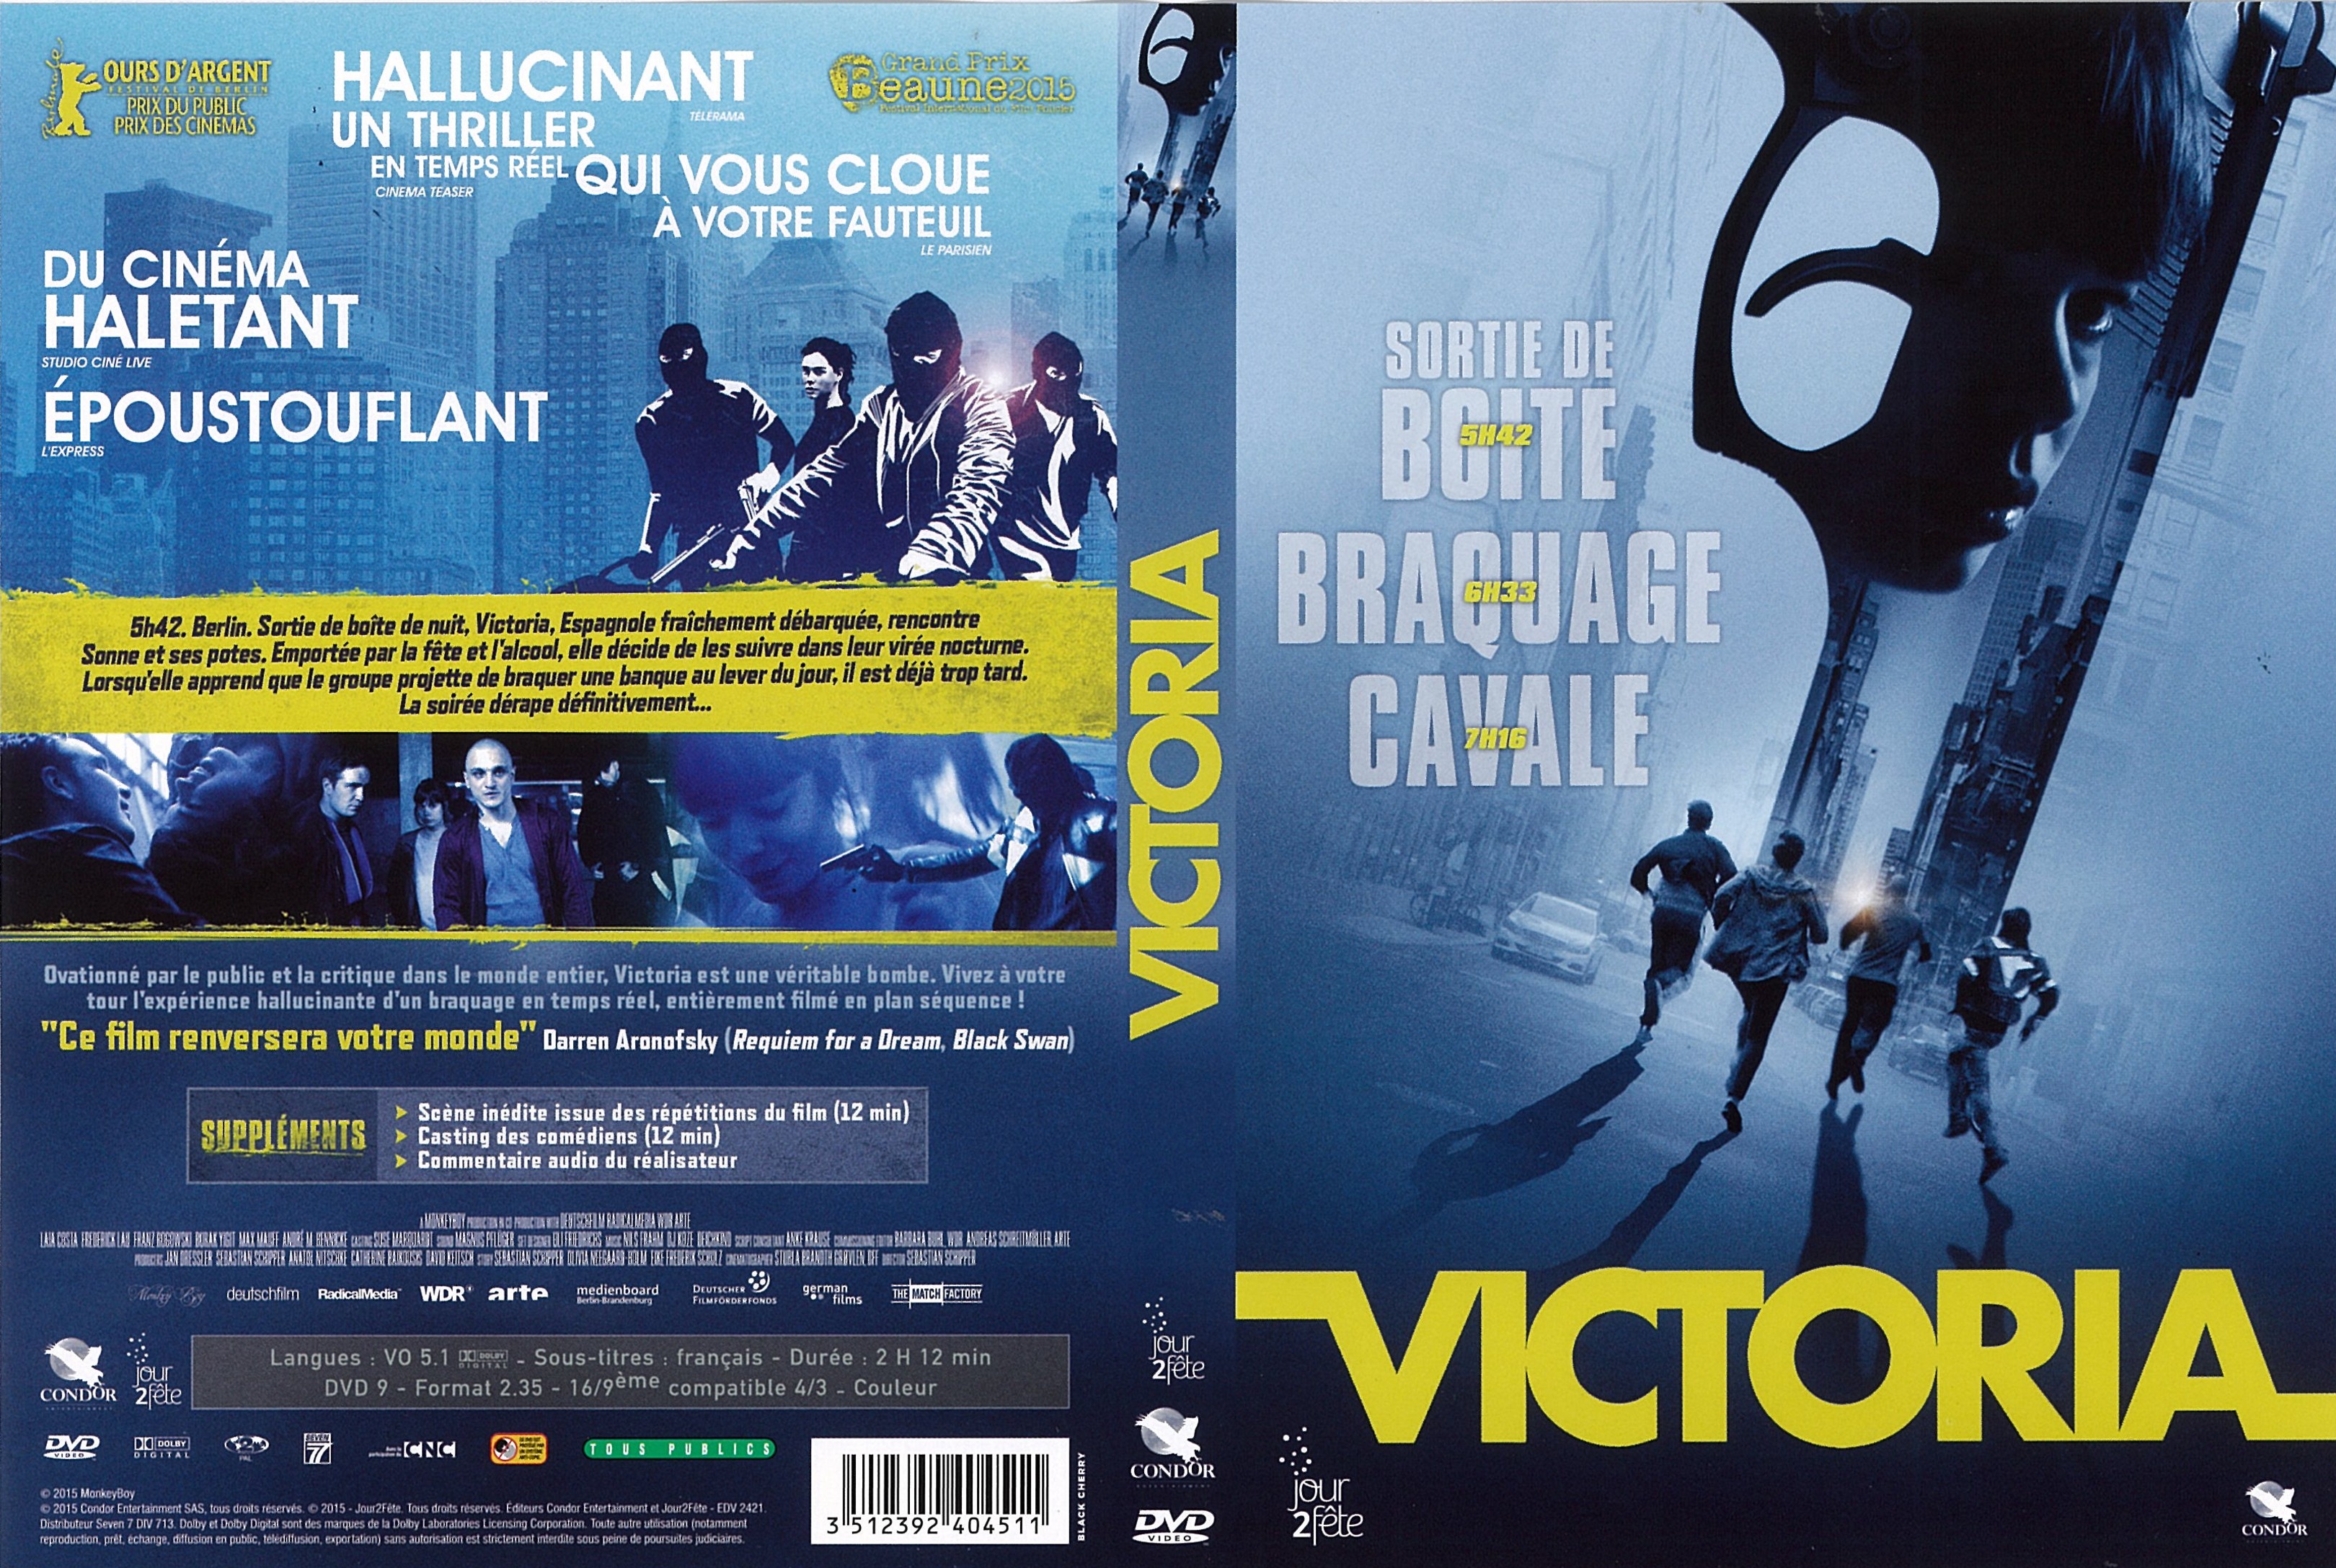 Jaquette DVD Victoria